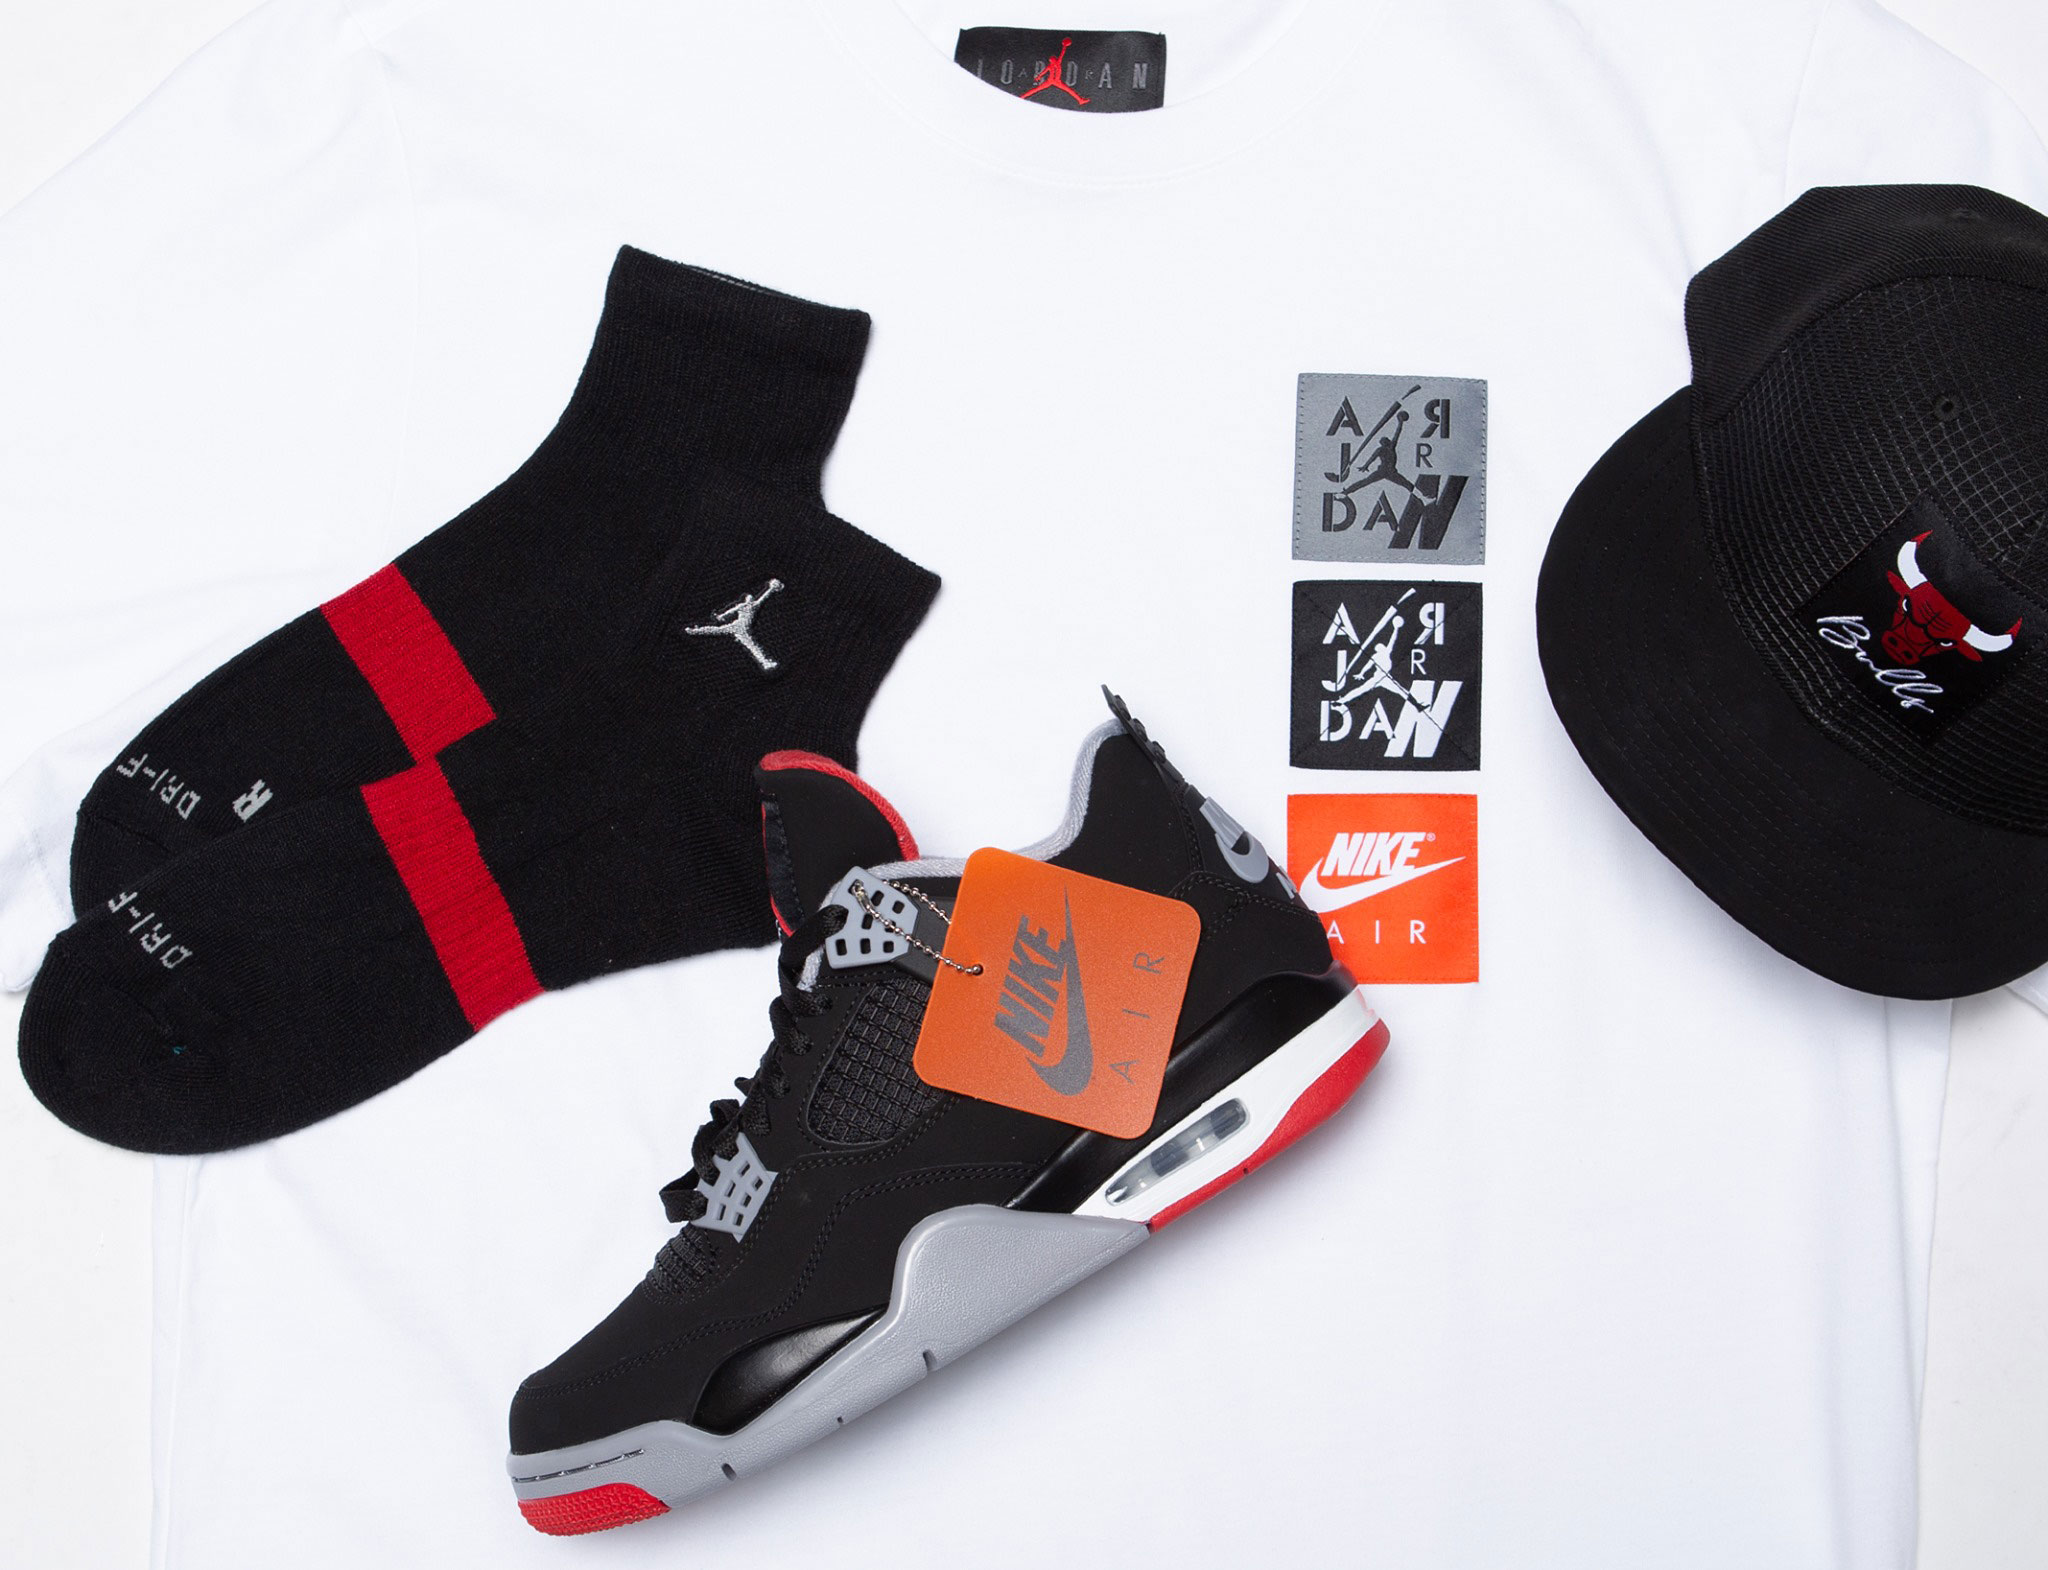 jordan-4-bred-hat-shirt-socks-outfit-match